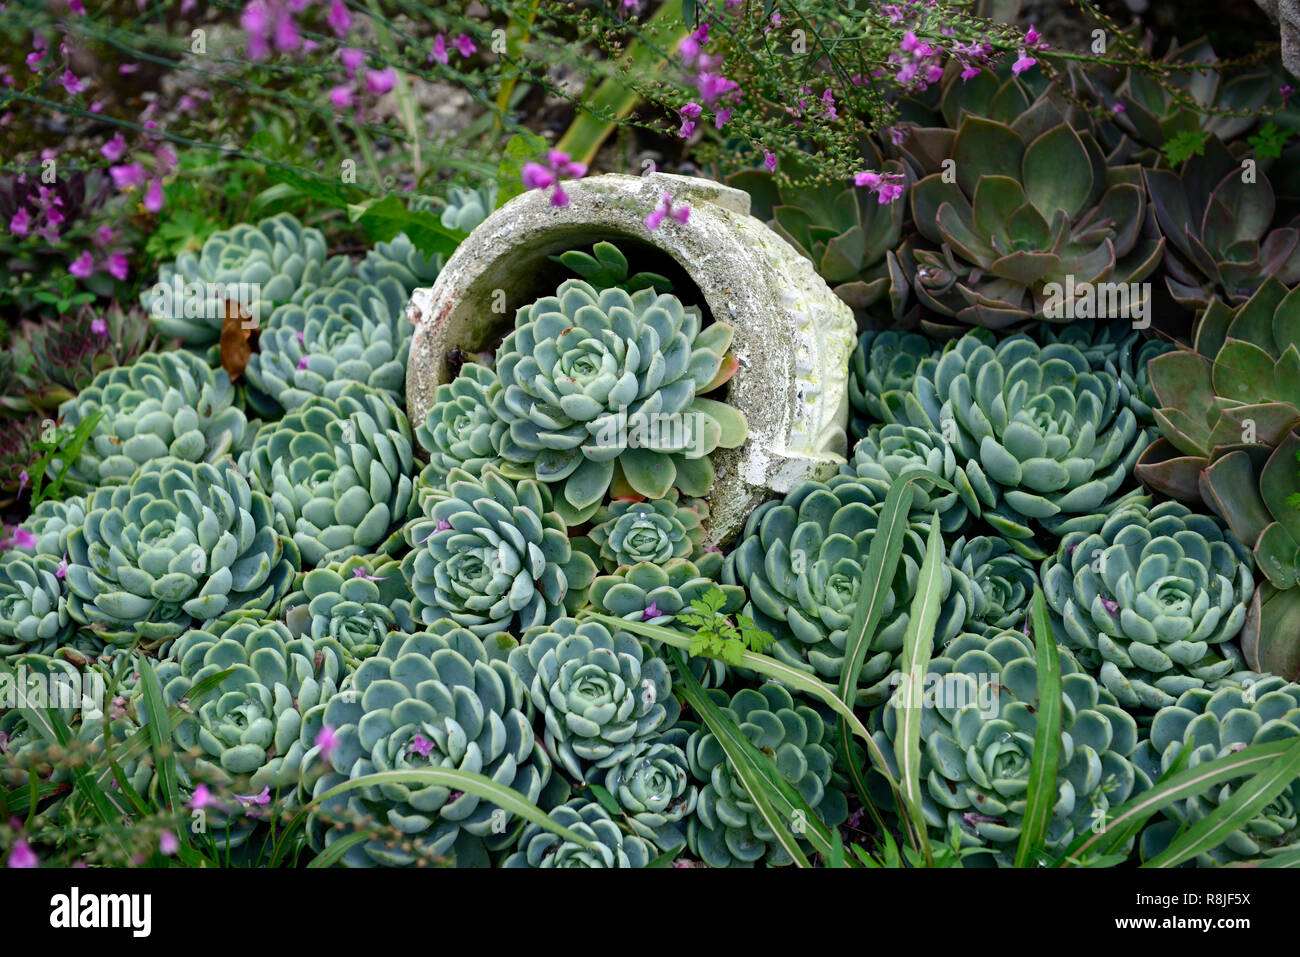 sempervivum,succulent,succulents,display,overturned urn,mimic,spill,spilled,water,flowing,garden design,bed,border,RM Floral Stock Photo